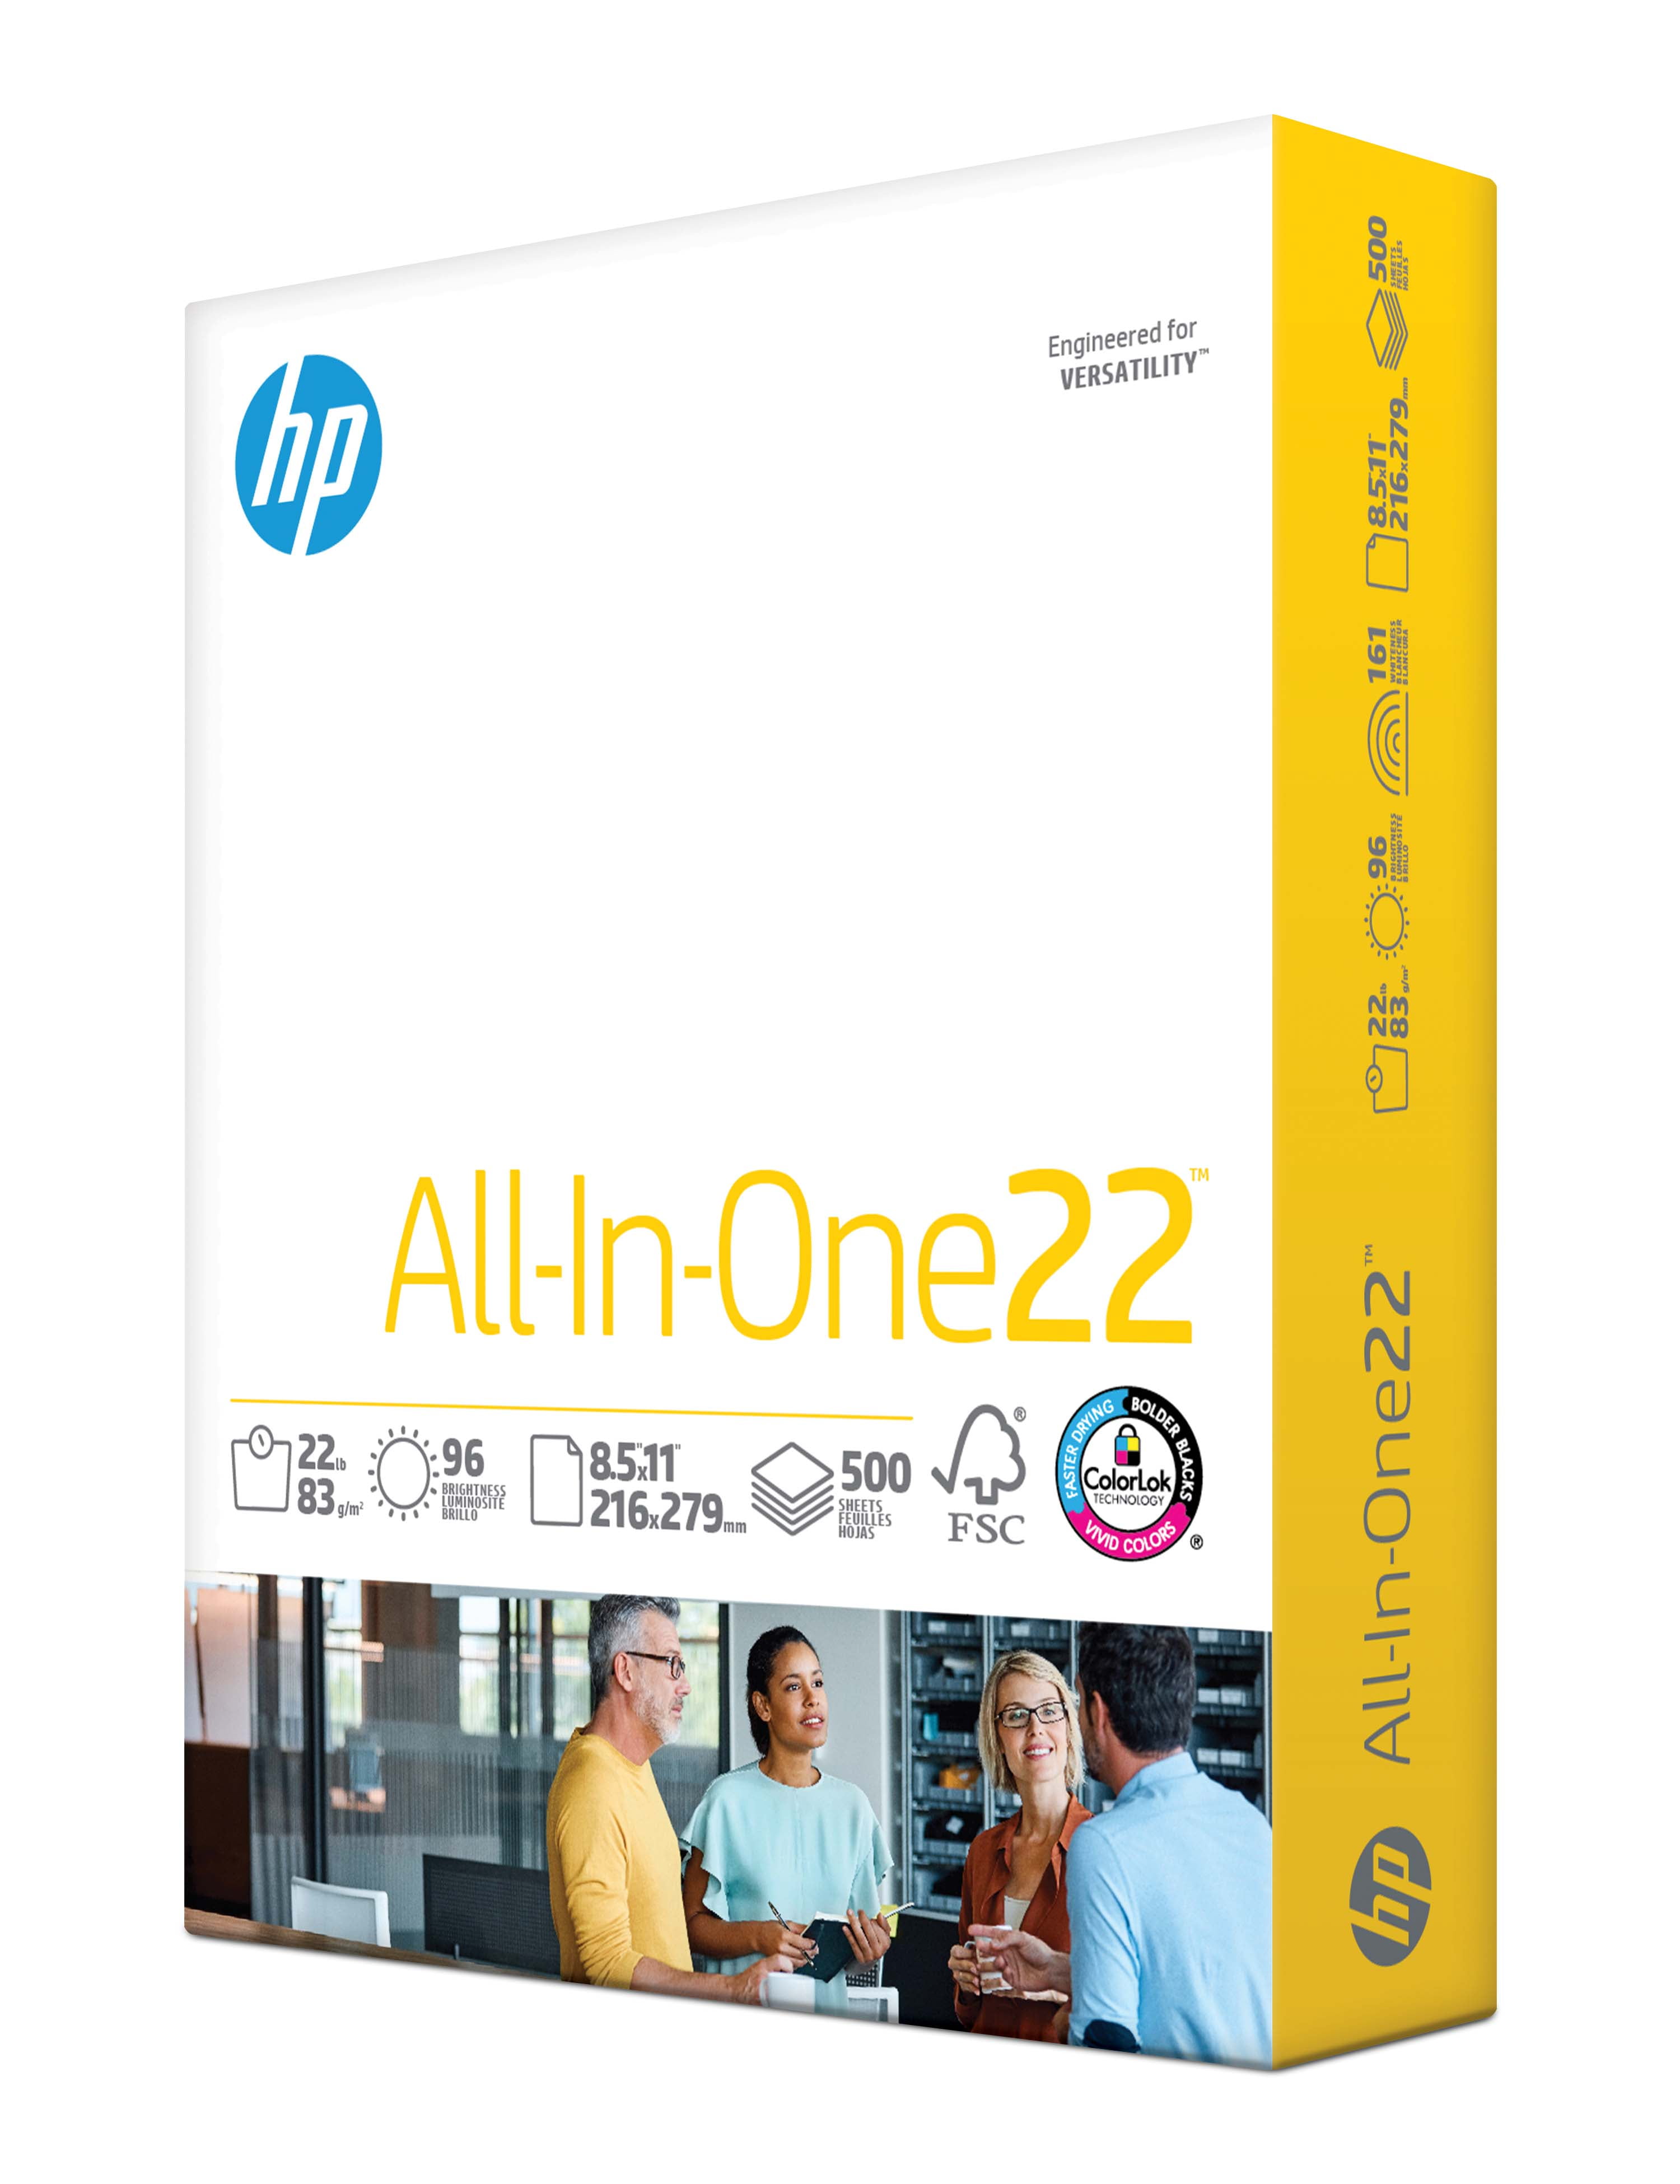 HP Office20, 20lb, 8.5 x 11, 5 reams, 2500 sheets 